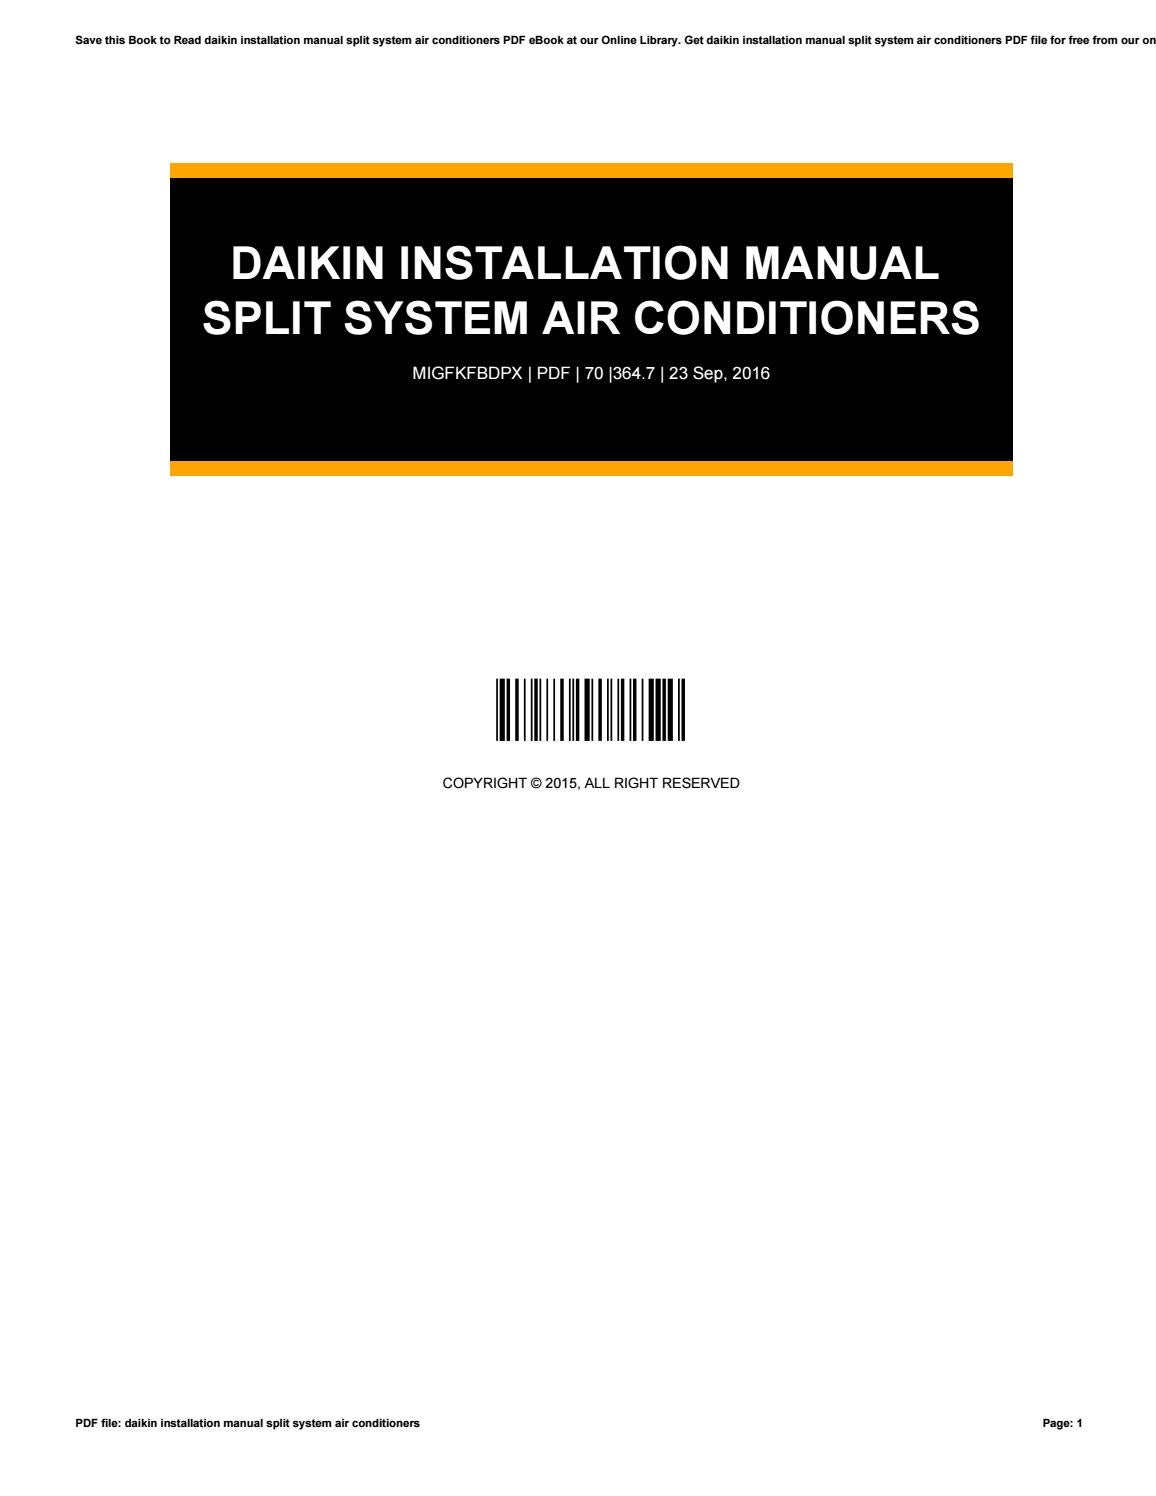 rfx 150 install instructions